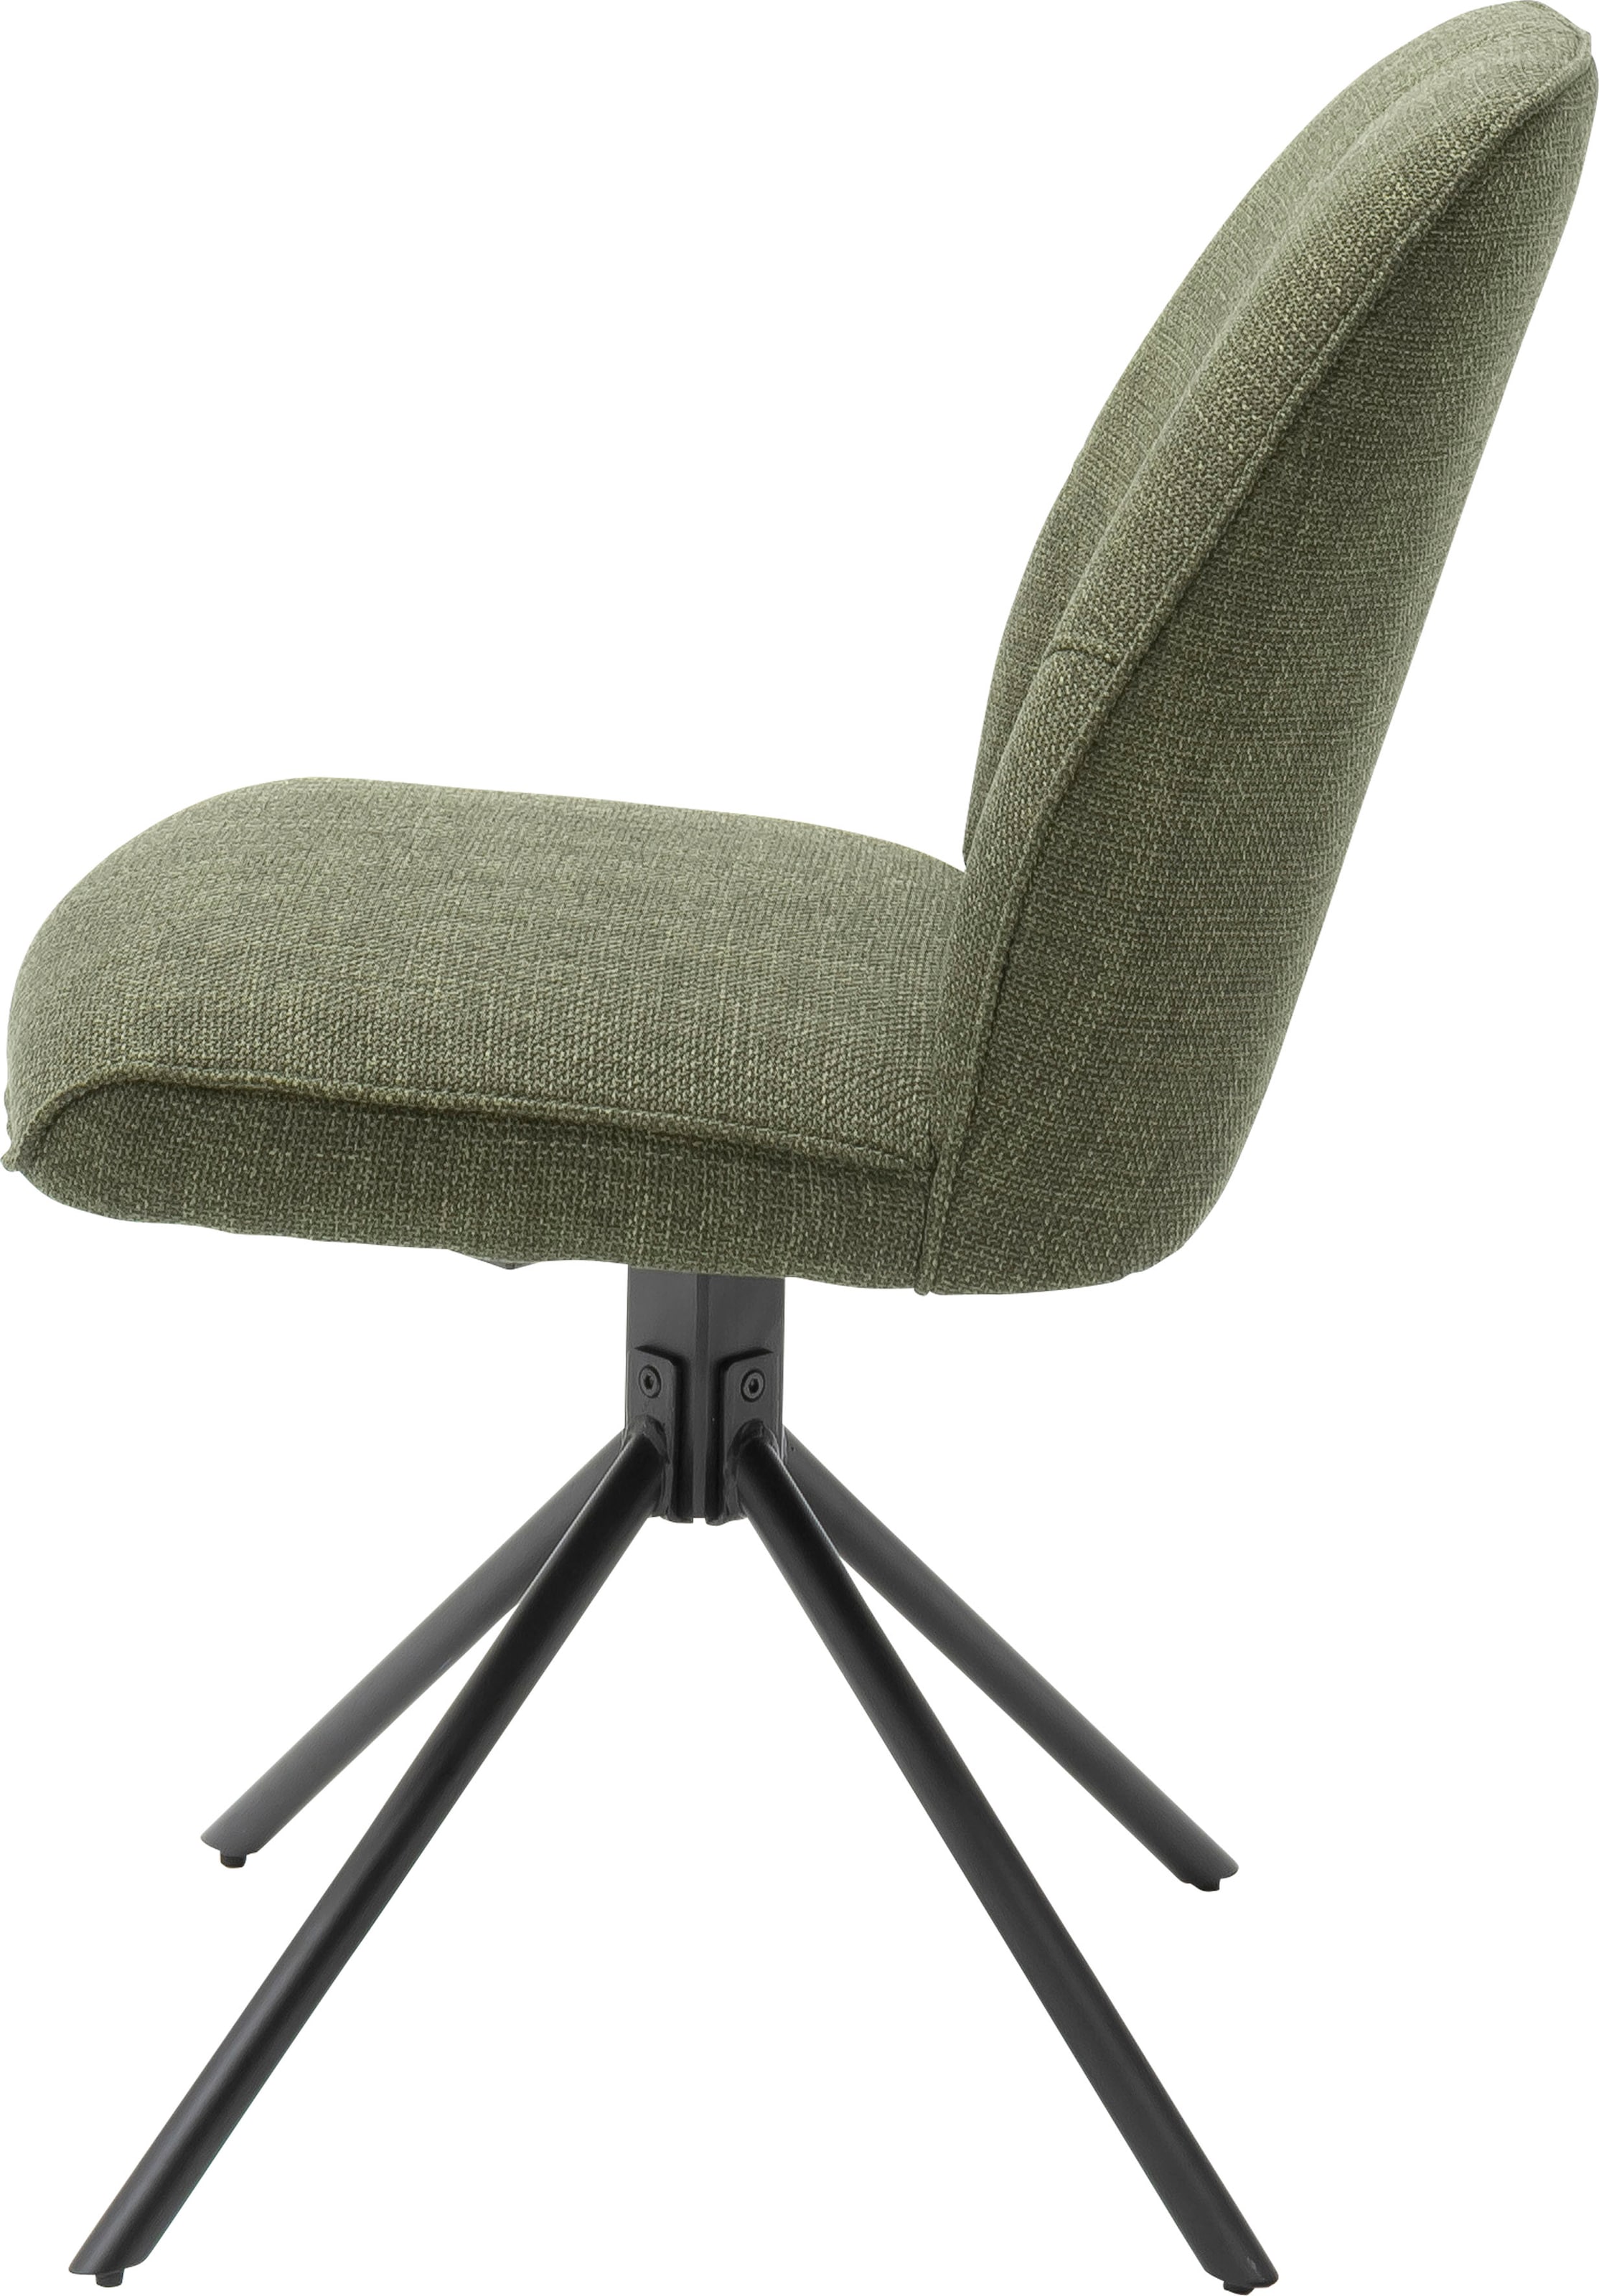 OTTO »Pemba«, Nivellierung, 2 furniture St., 2er-Set, MCA belastbar Stuhl mit 180°drehbar bei kg 120 (Set), 4-Fußstuhl bis